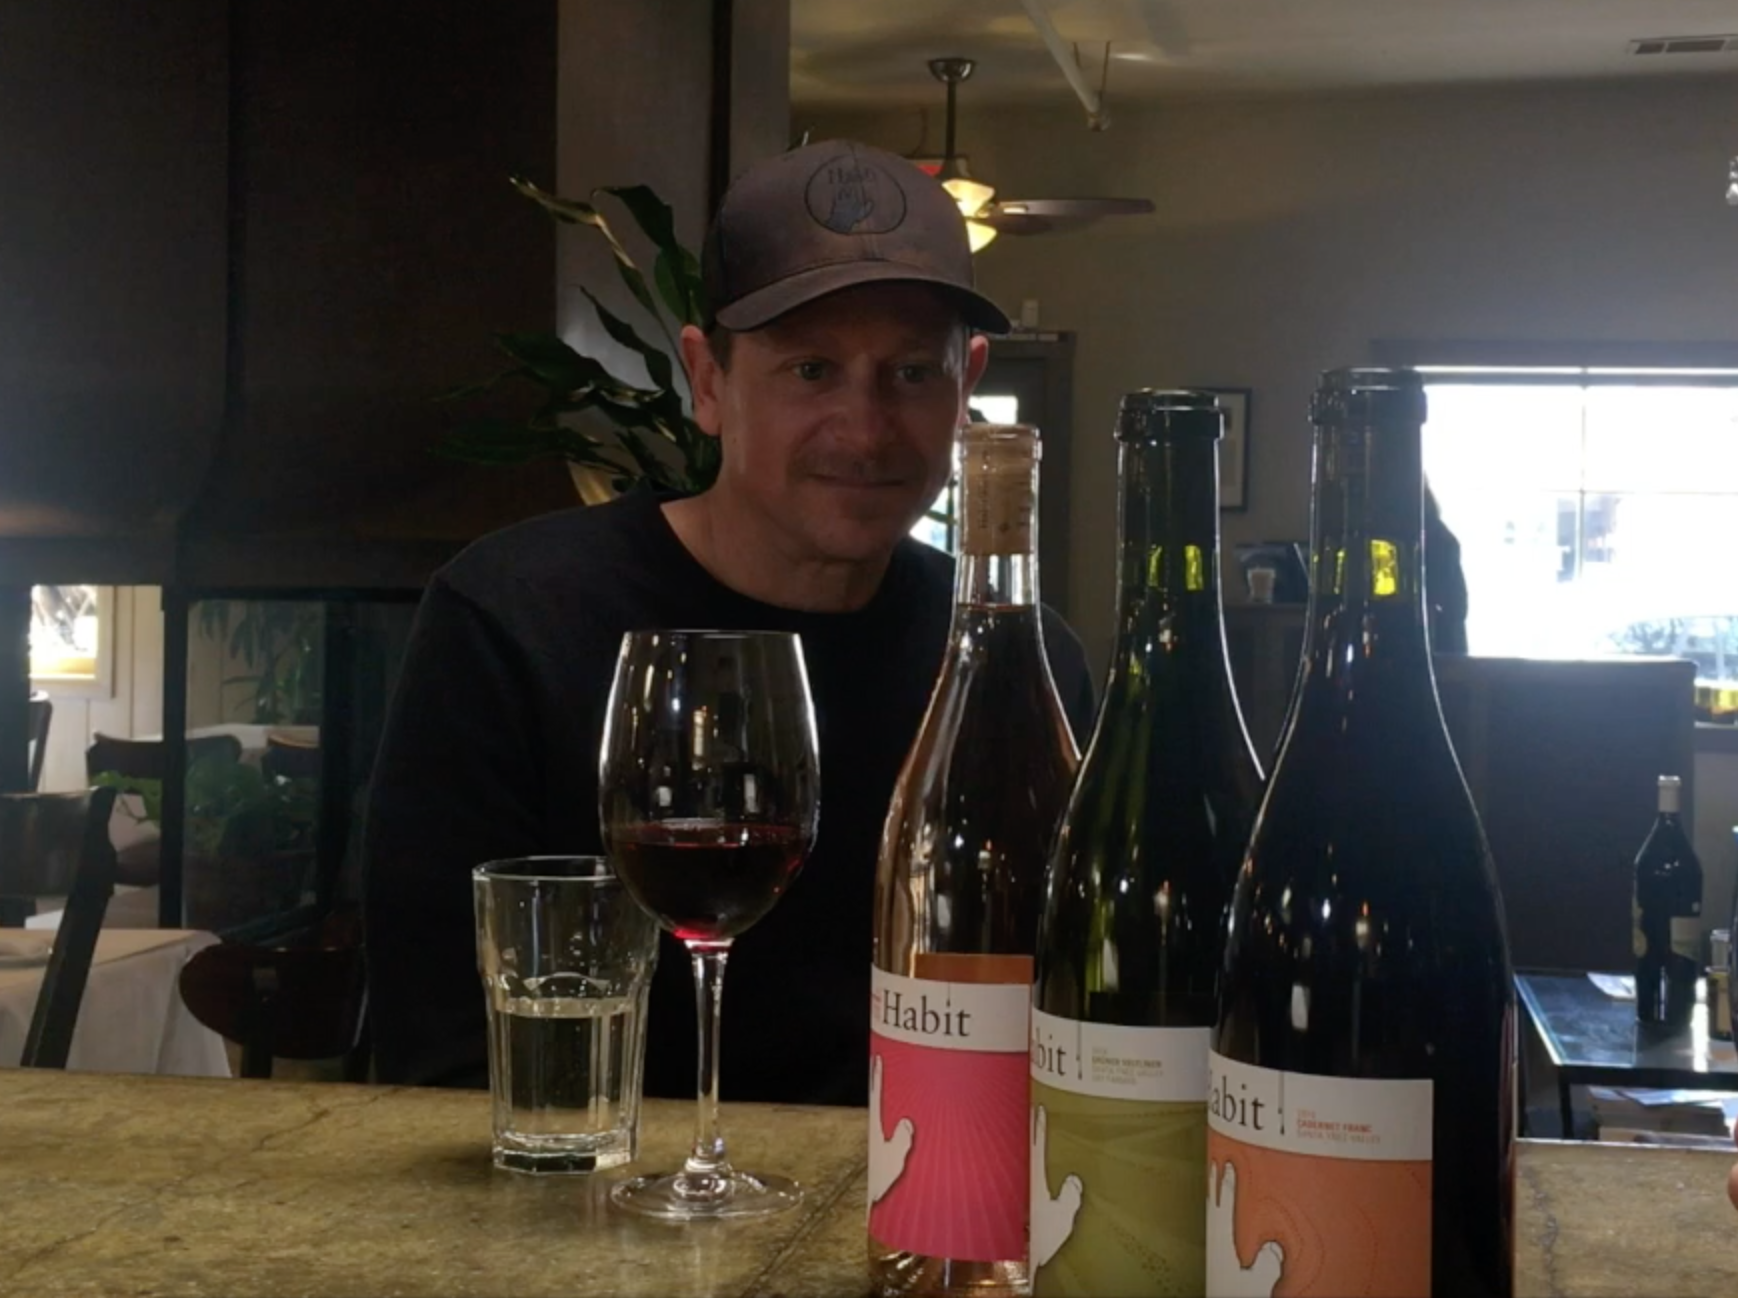 Jeff Fischer of Habit Wine and American Dad: The Sprudge Wine